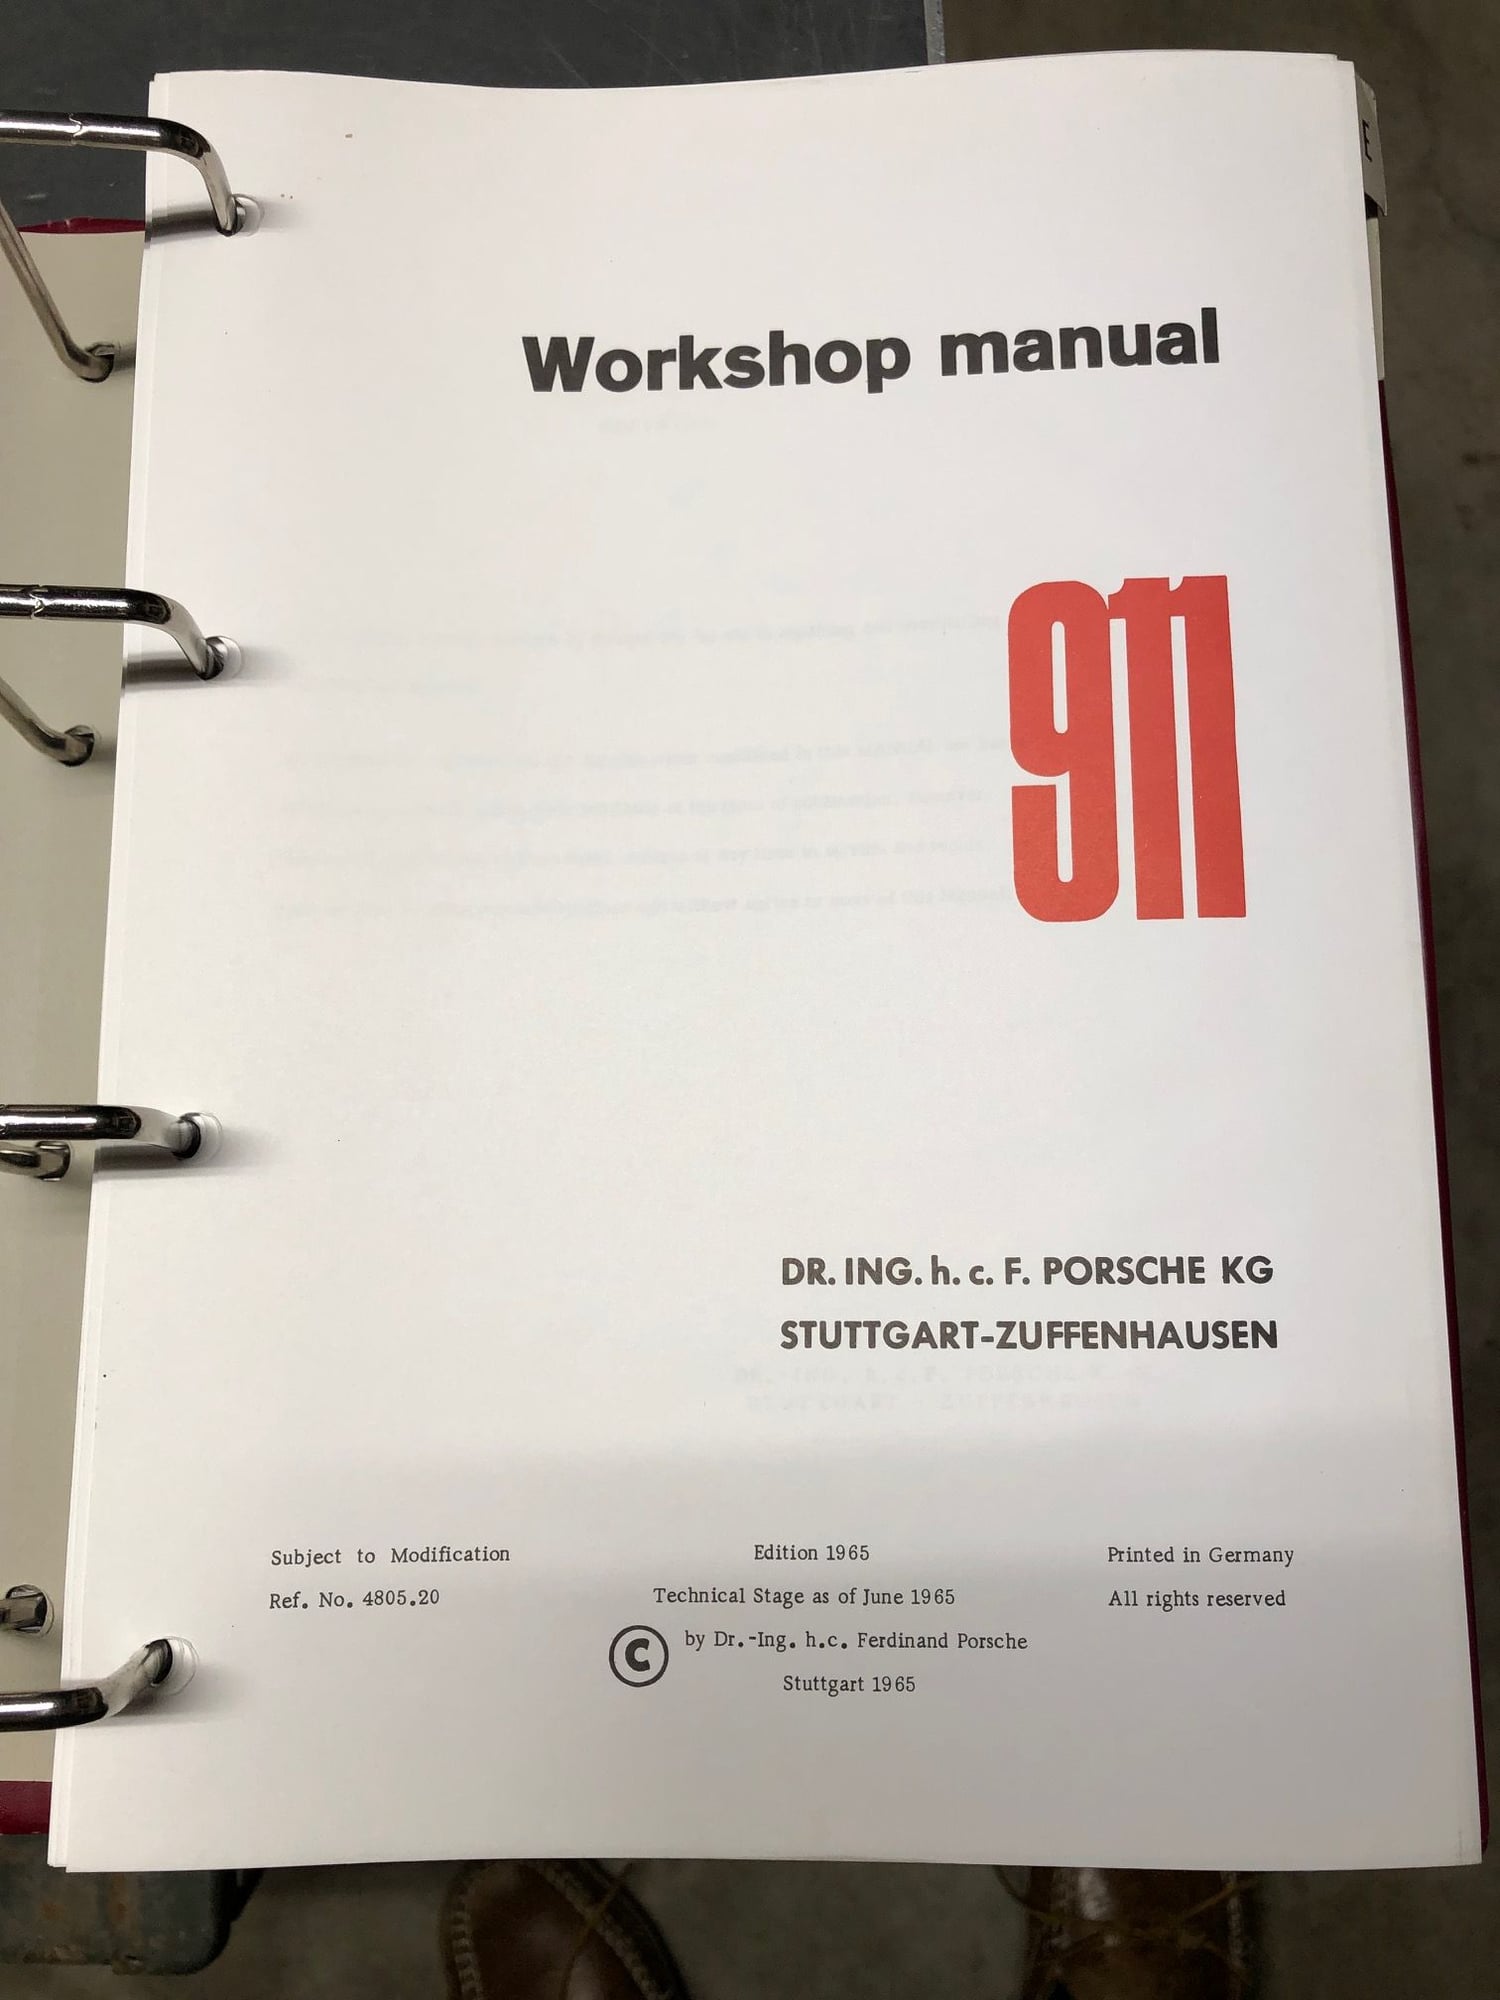 Miscellaneous - Porsche 911 Workshop Manual Copyright 1965 - Used - 1965 to 1973 Porsche 911 - Sequim, WA 98382, United States